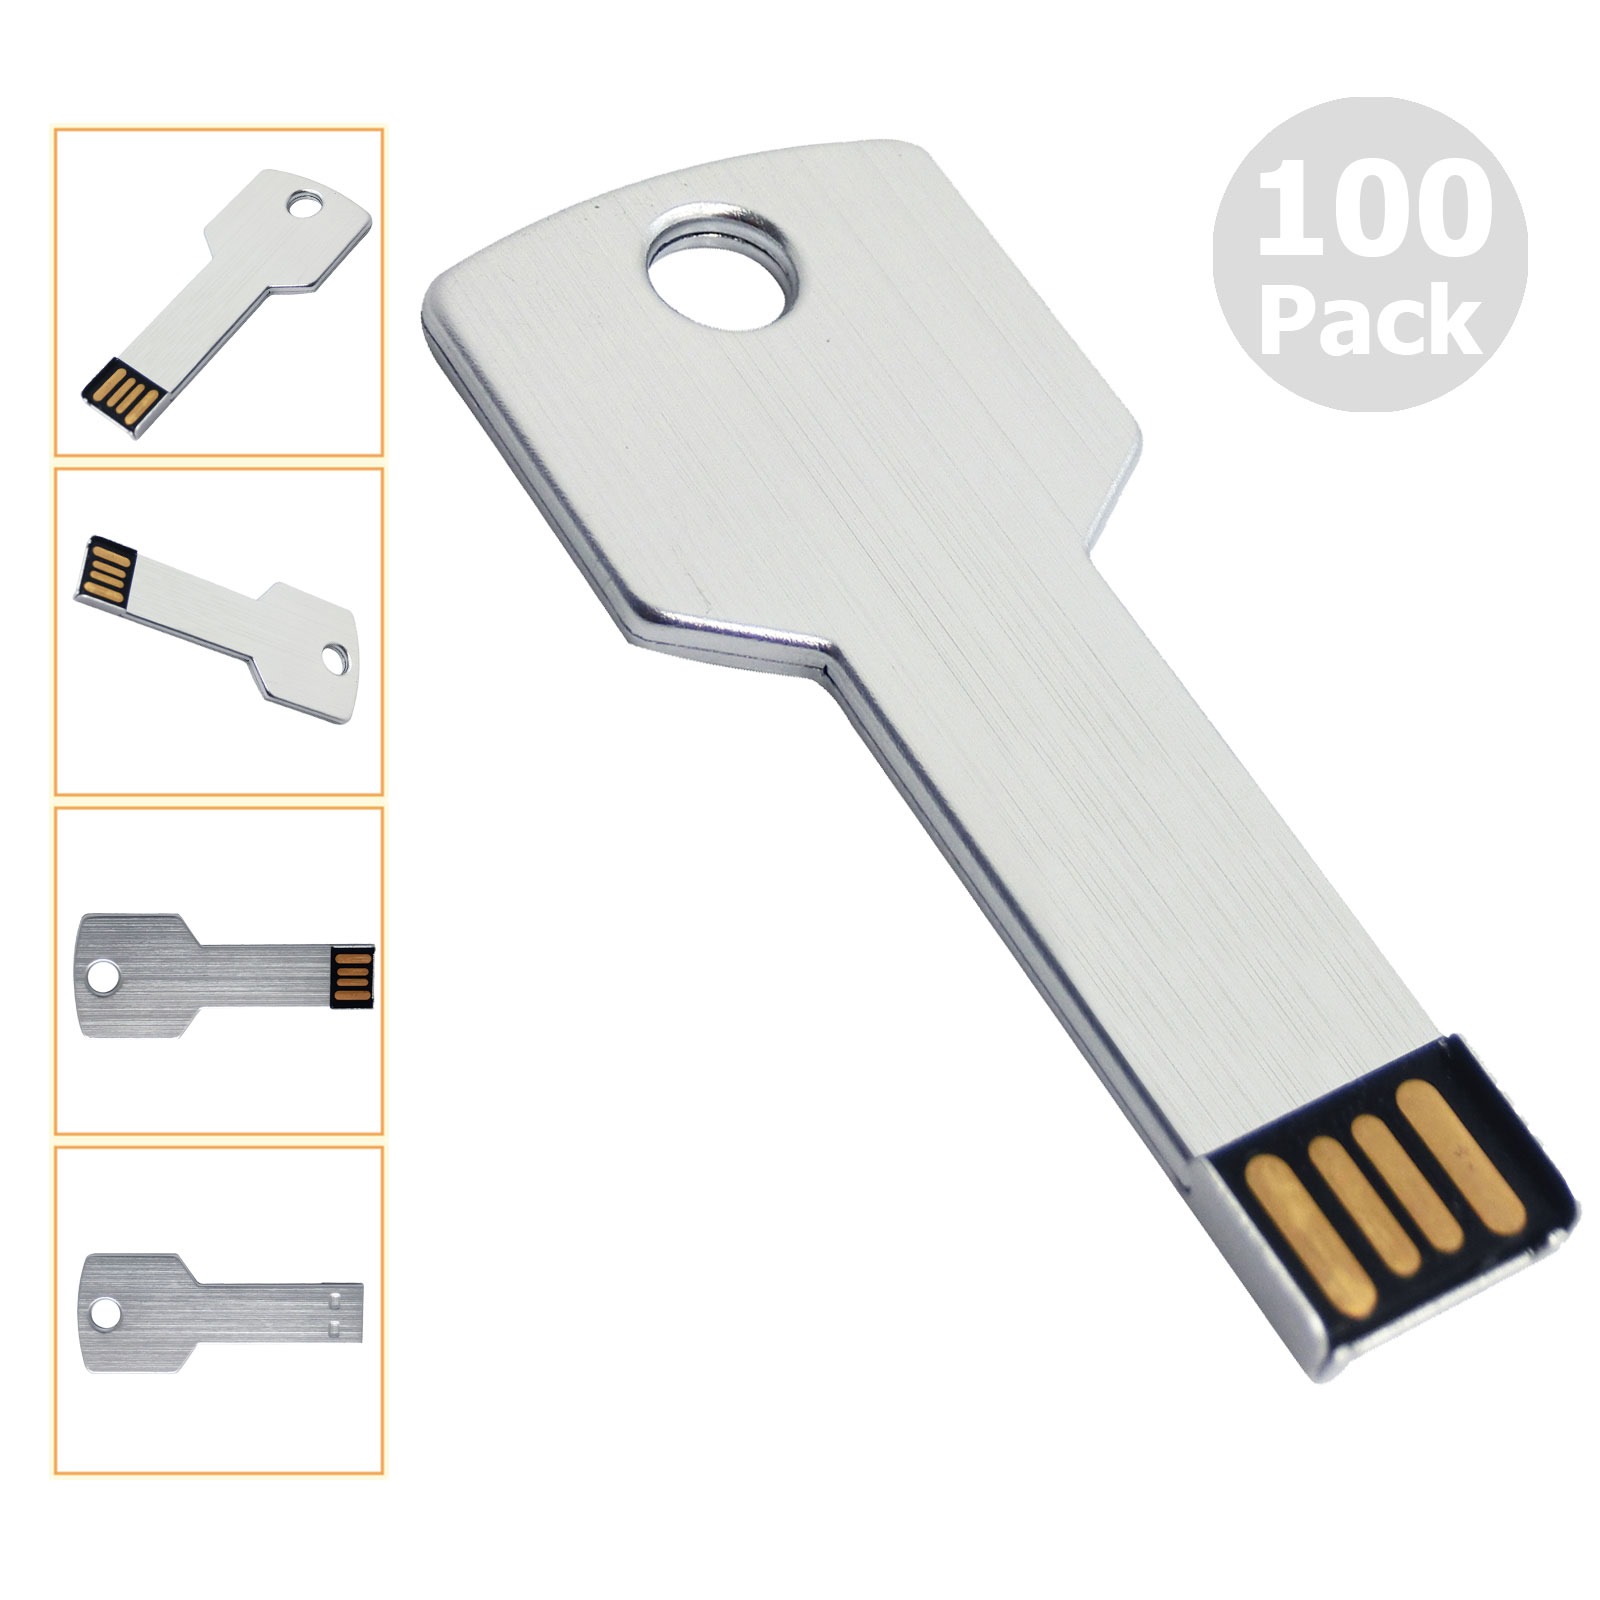 Free Shipping 100pcs 16GB USB 2.0 Flash Drives Flash Memory Stick Metal Key Blank Media for PC Laptop Macbook Thumb Pen Drives Multicolors